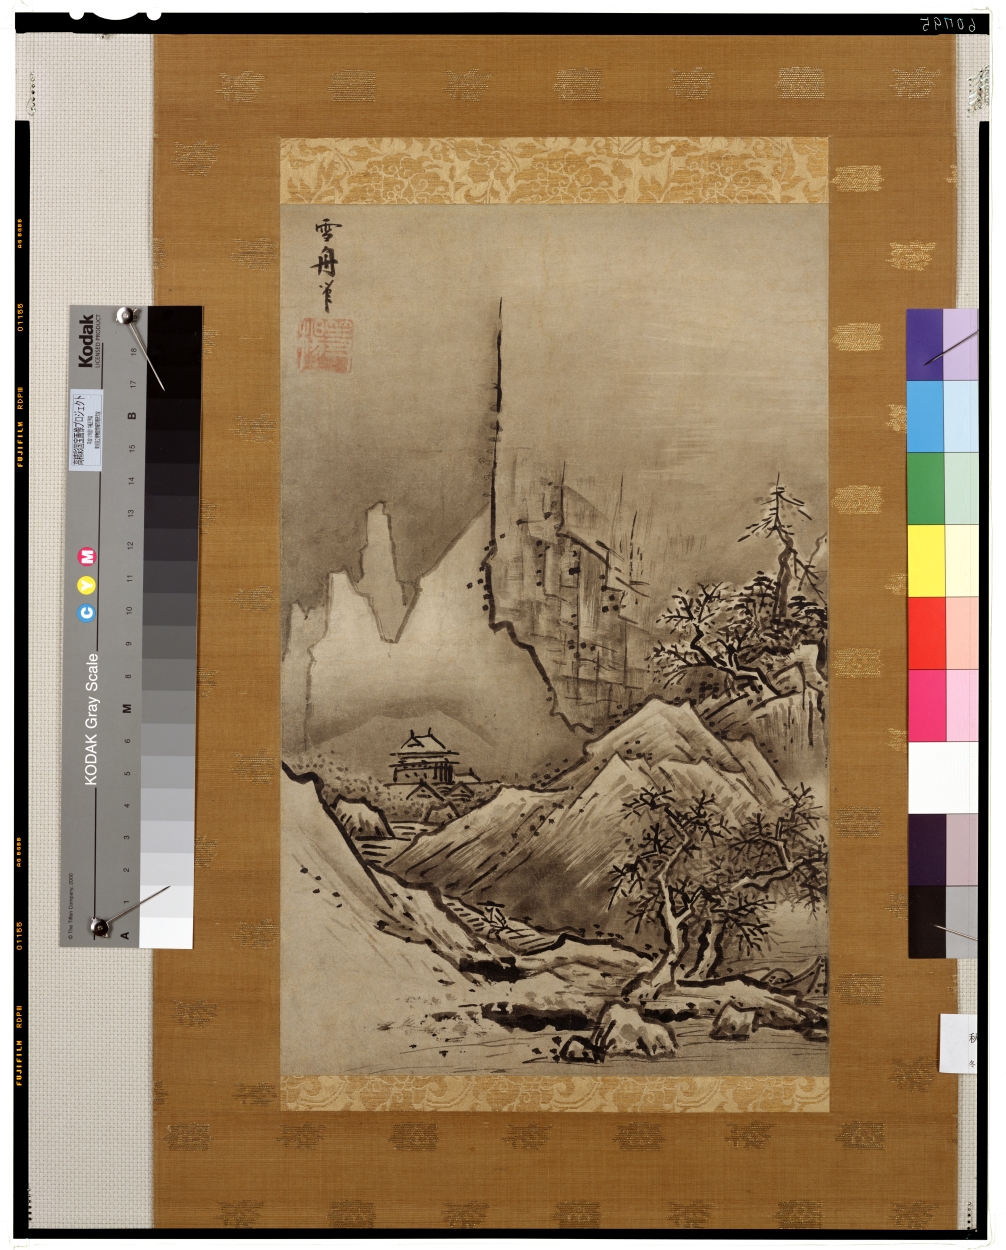 C0060795 秋冬山水図 - 東京国立博物館 画像検索